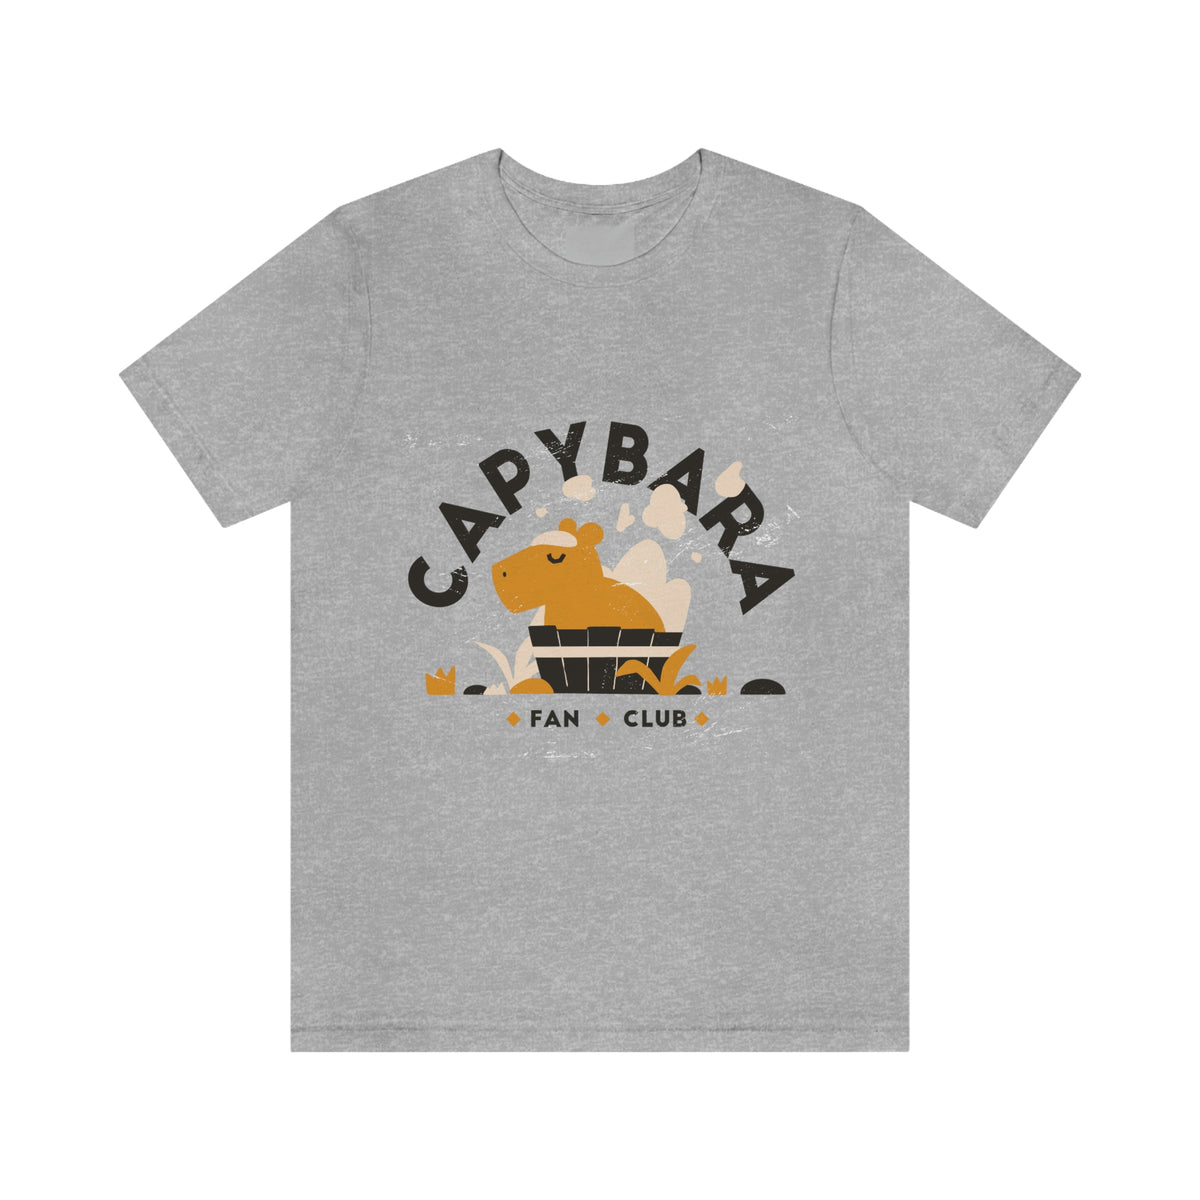 Capybara Fan Club - Premium Unisex Tee